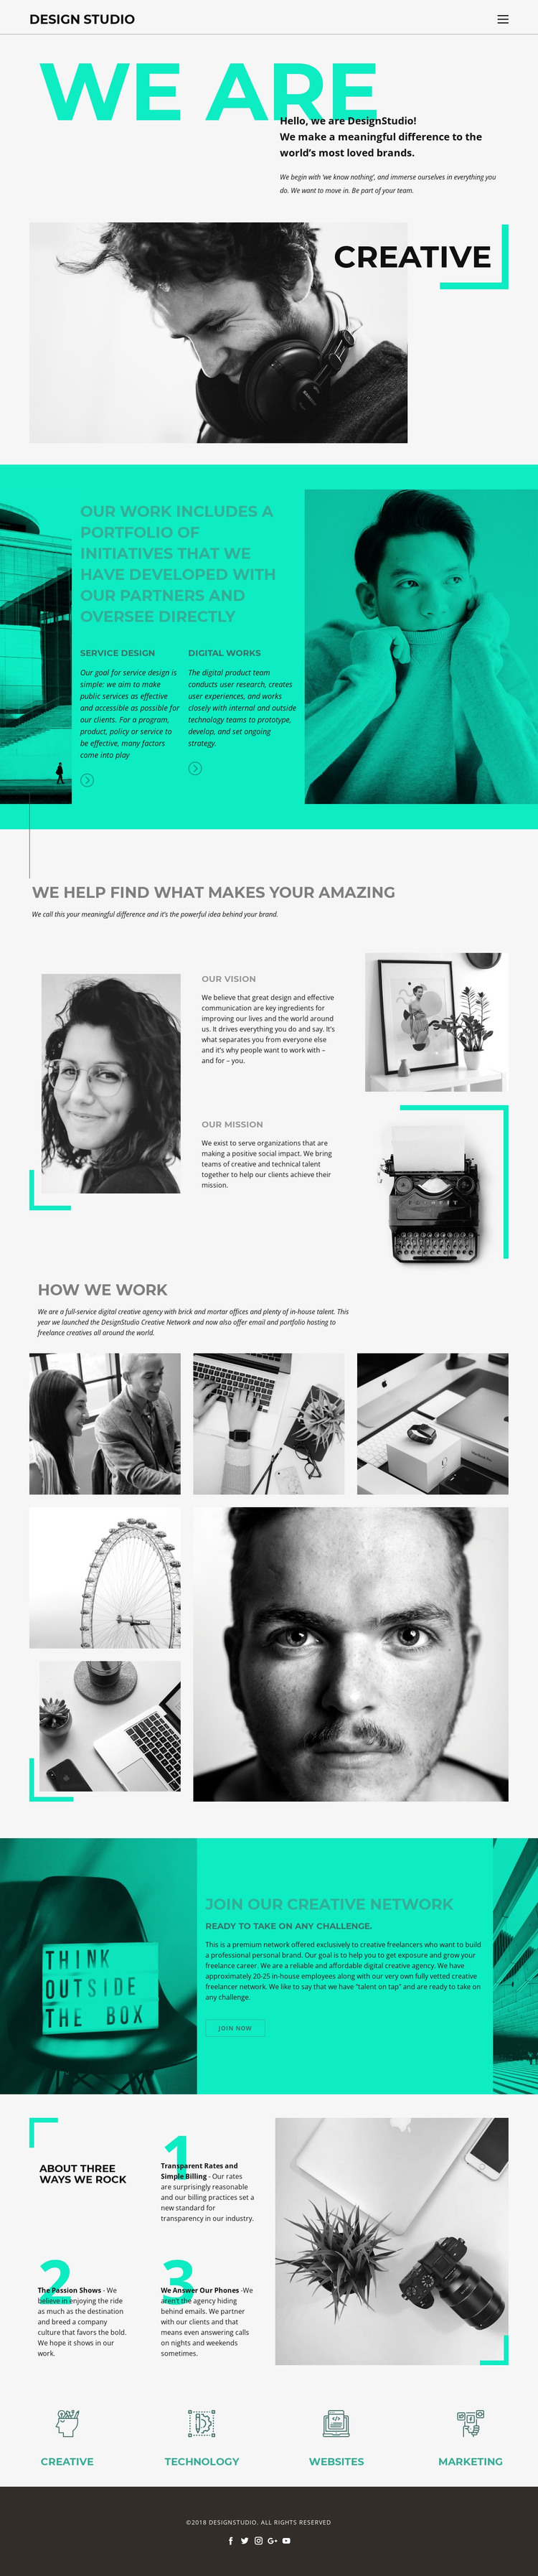 We are creative business Web Design